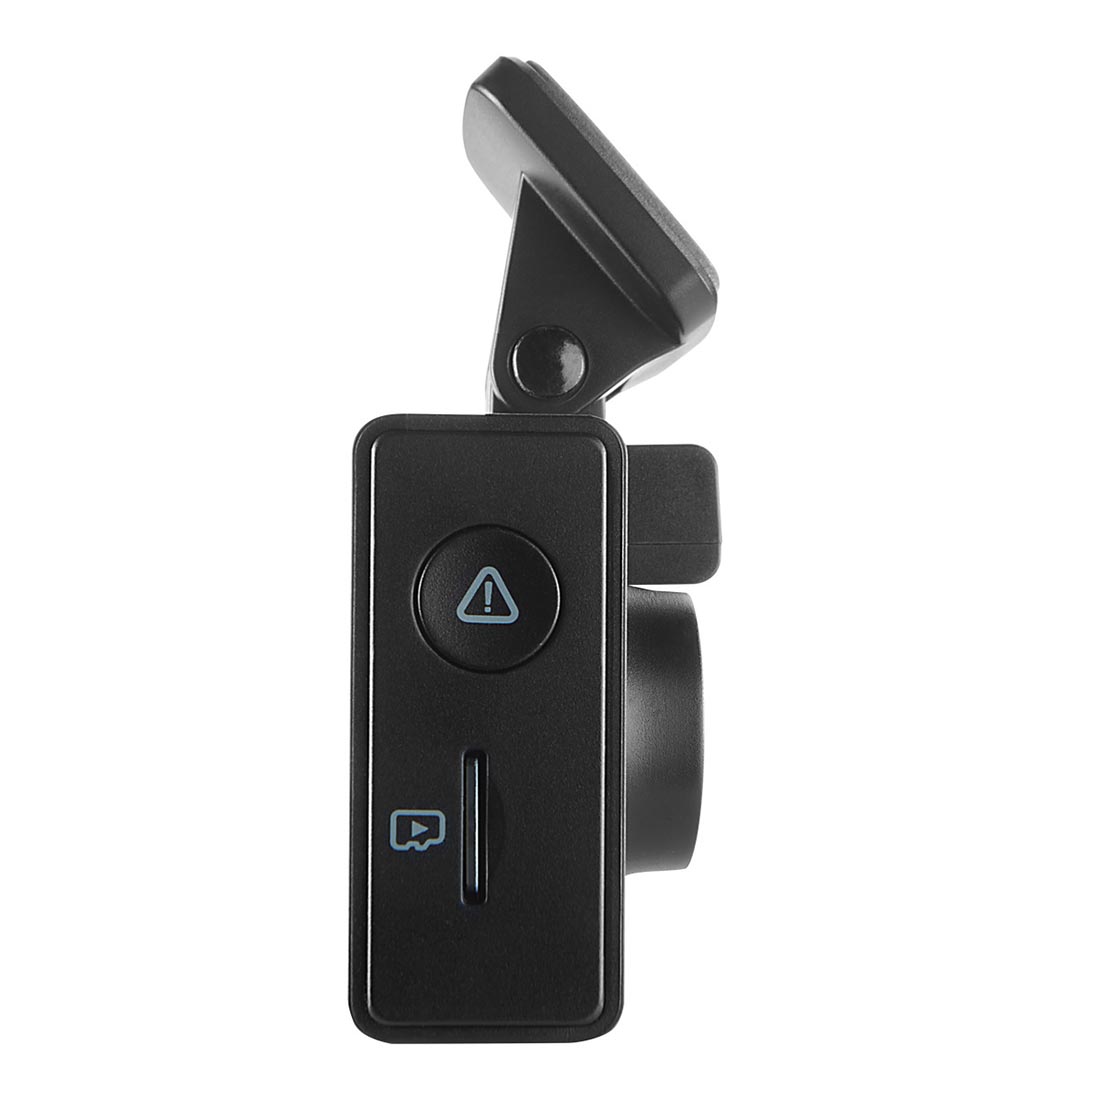 Cobra SC 200D Dual-View Smart Dash Cam, Rear Cam and Hardware (SC200D-HW) – Black